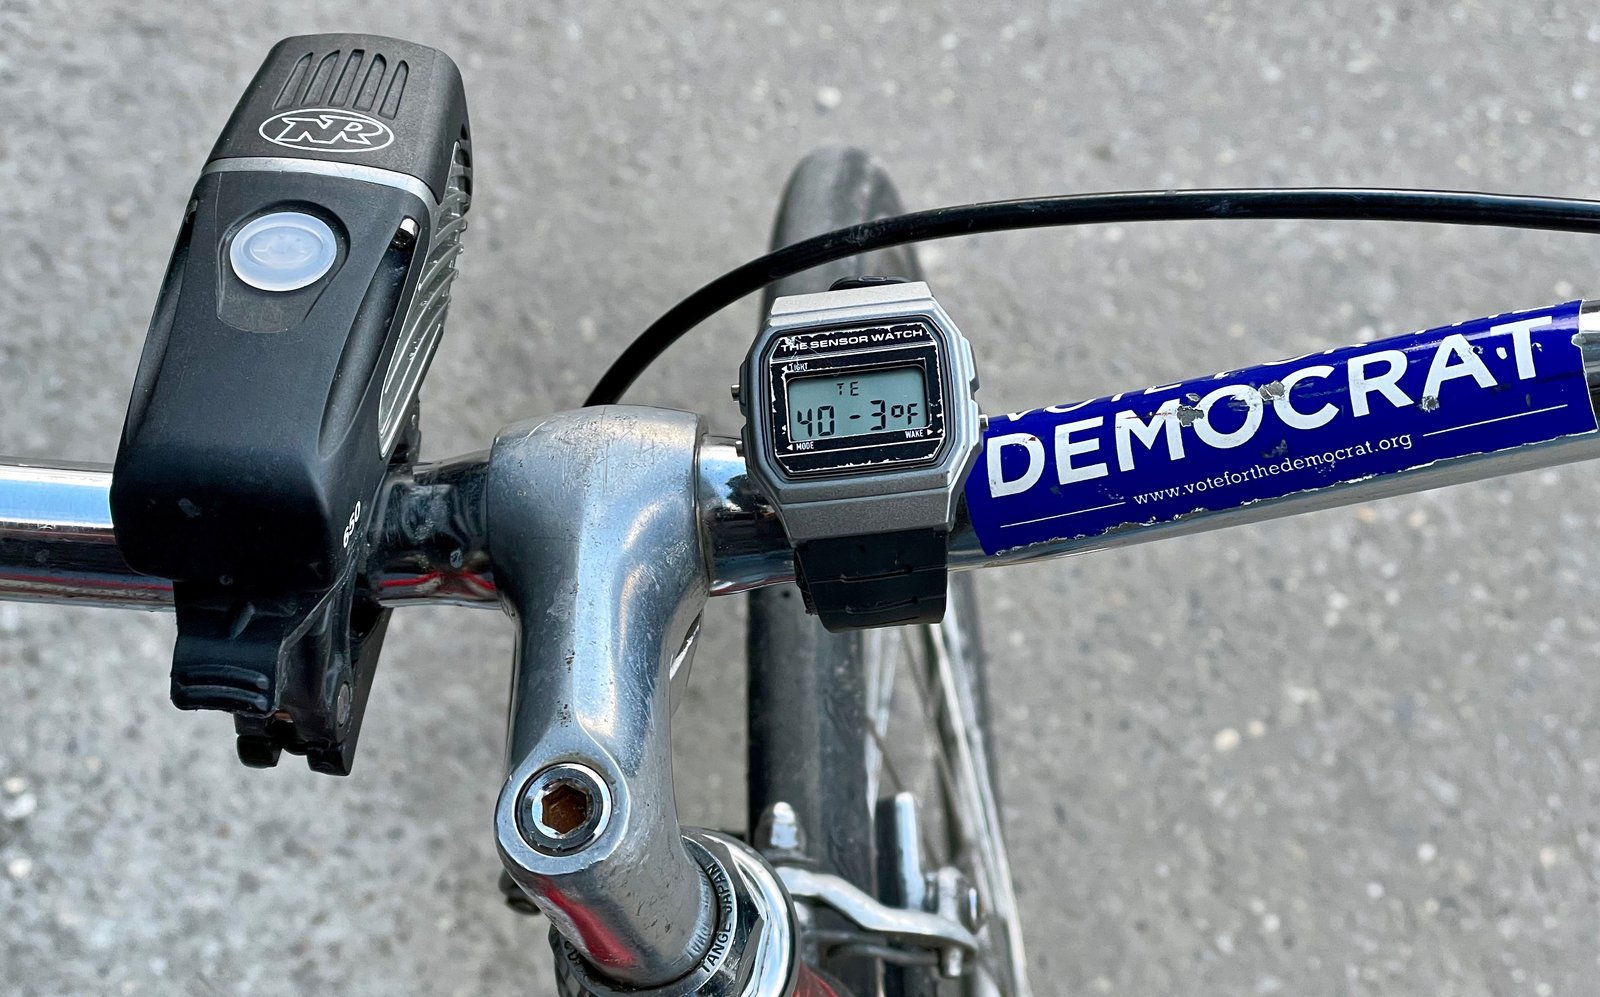 Sensor Watch on bike handlebars, displaying the current temperature (40.3 ° F)